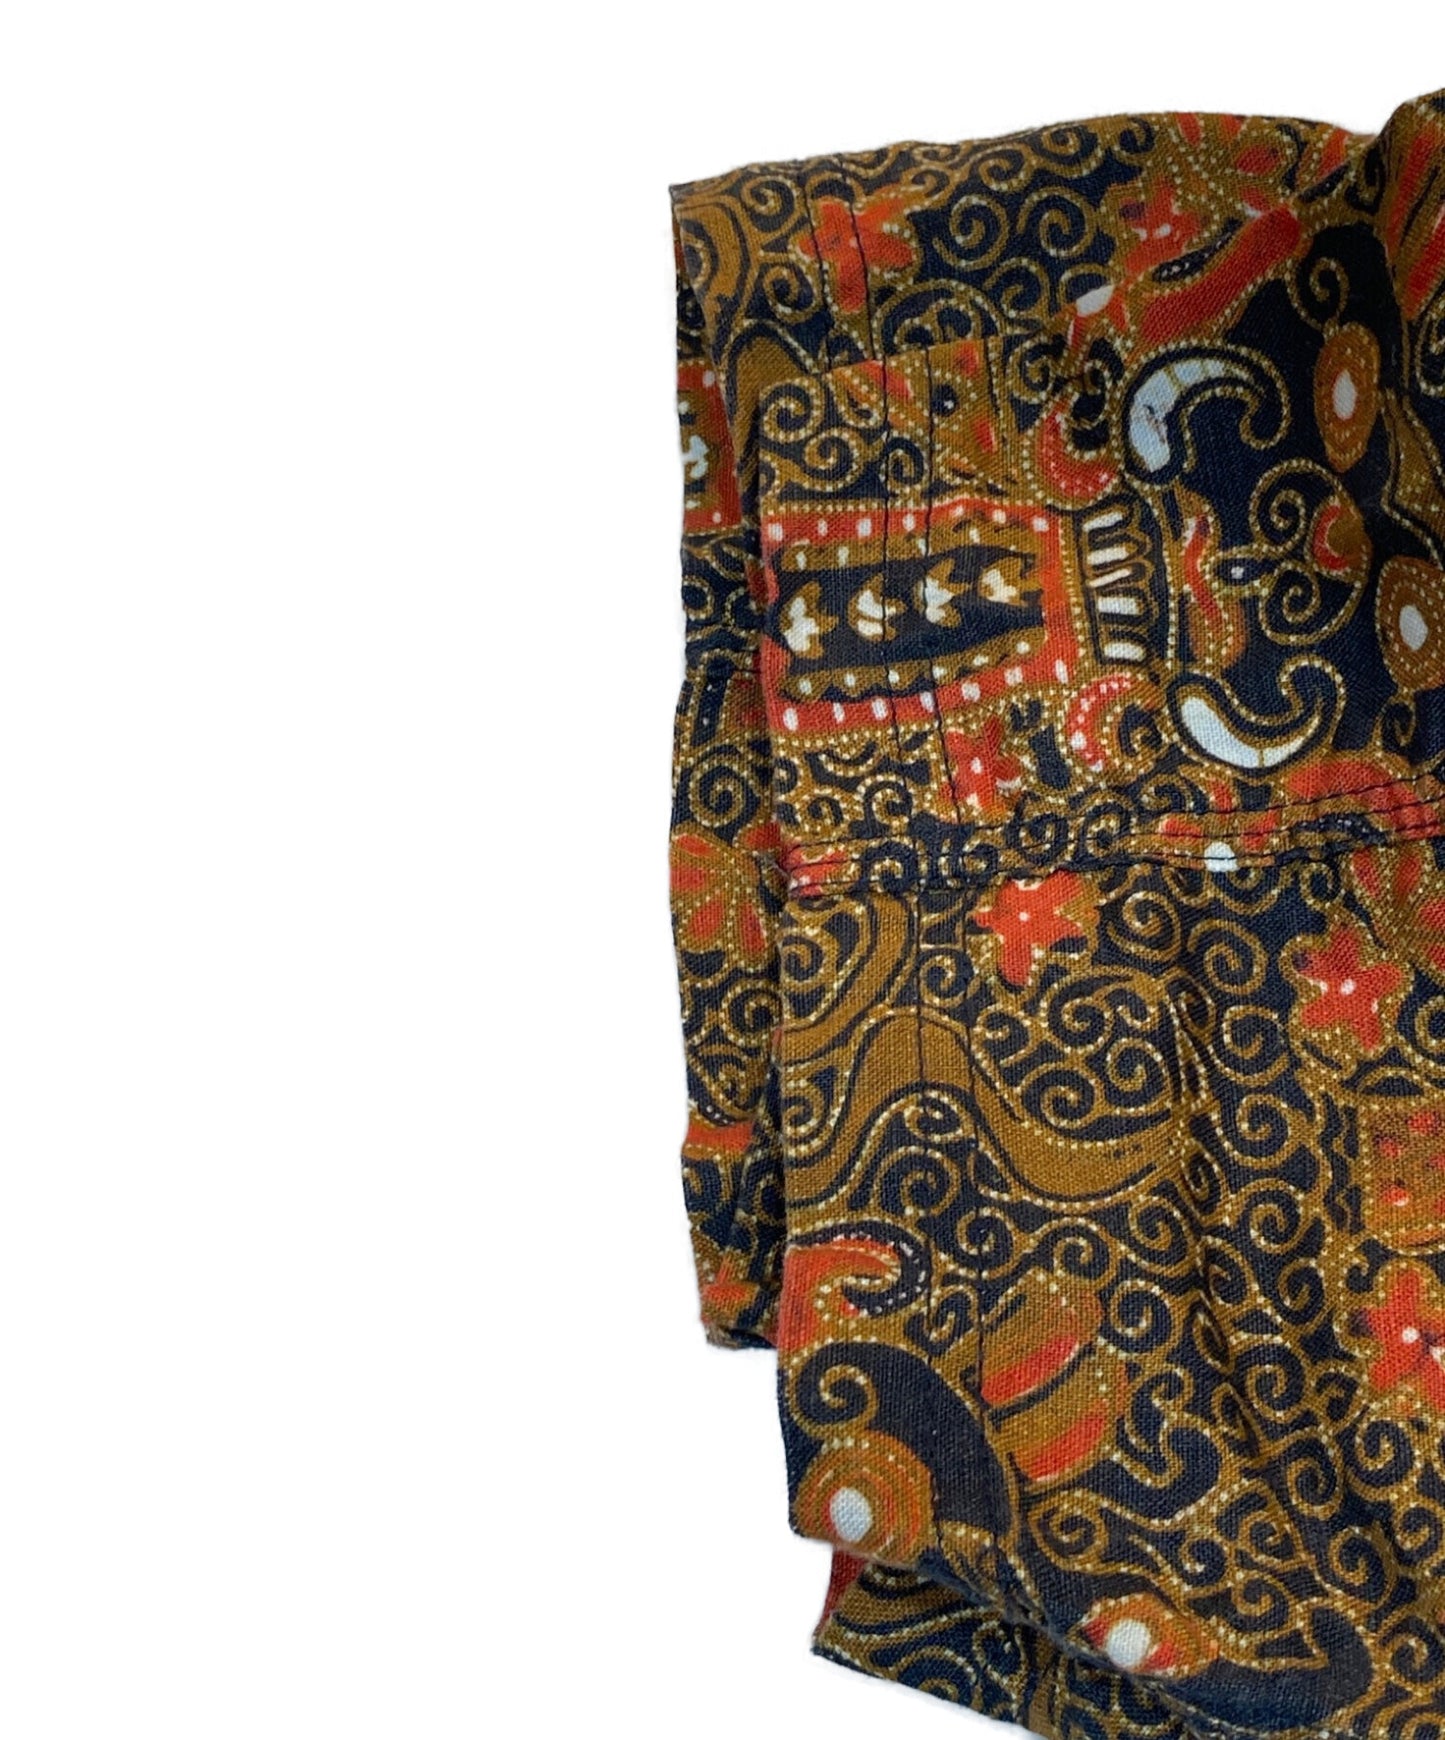 COMME des GARCONS JUNYA WATANABE MAN Linen Paisley Pattern Short-Sleeved Shirt WI-B025